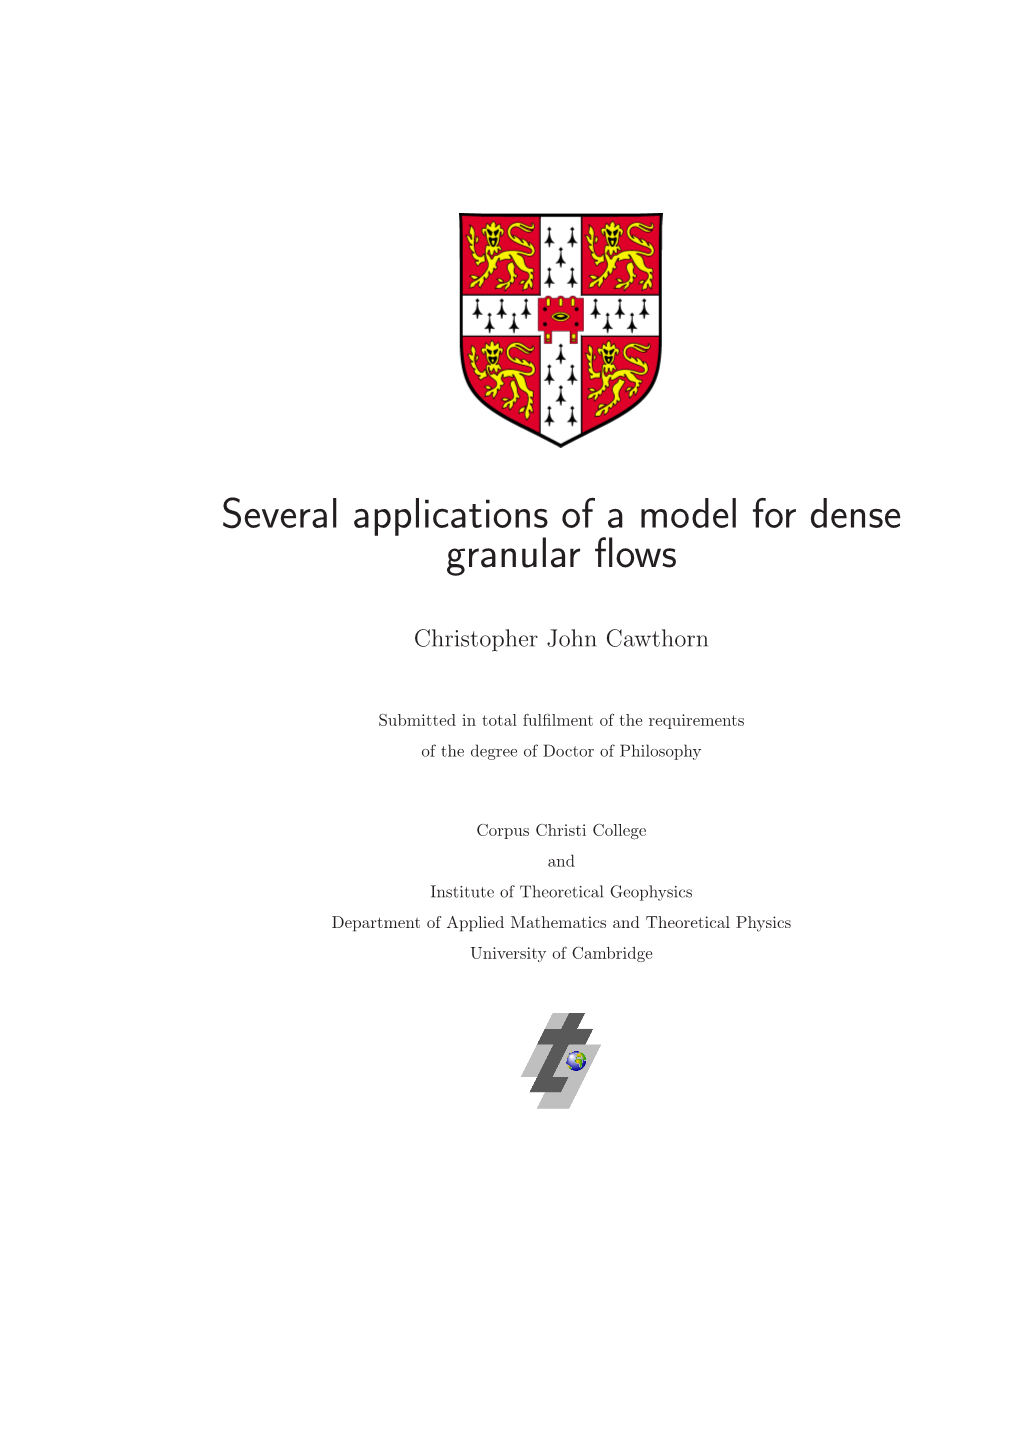 Several Applications of a Model for Dense Granular Flows